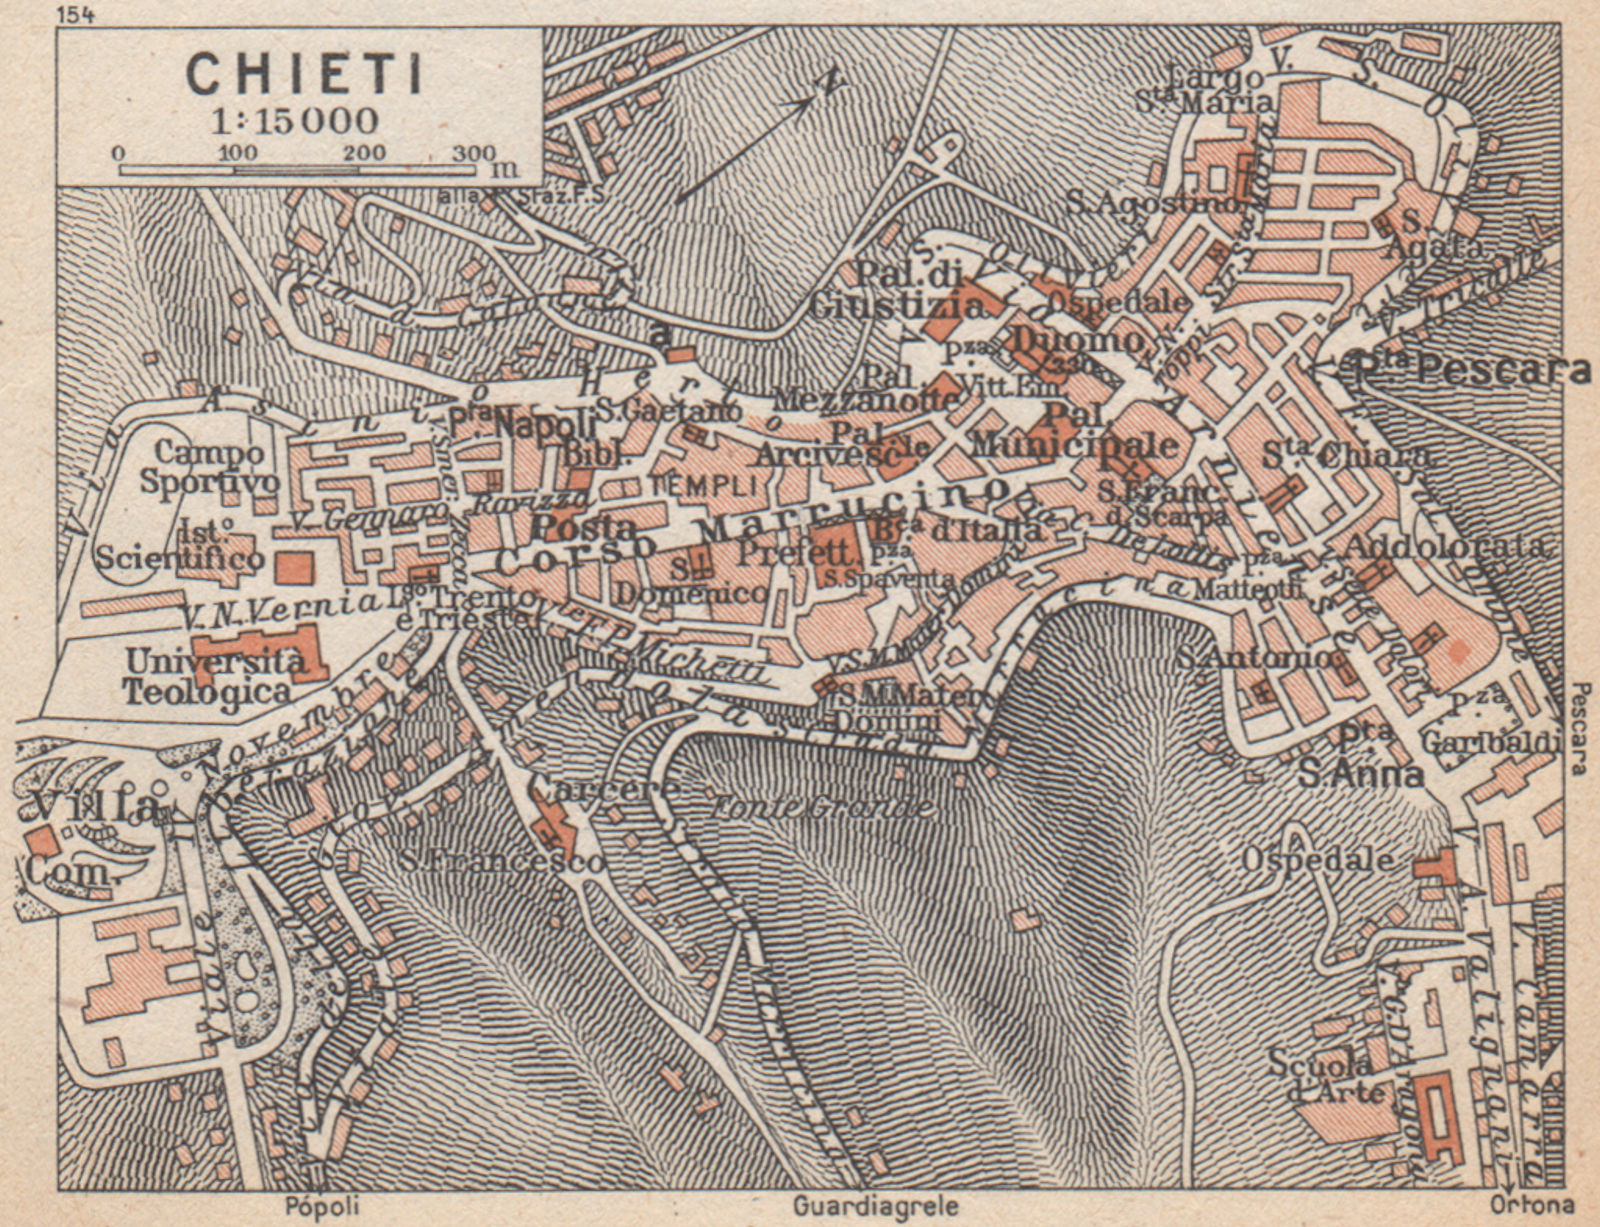 Associate Product CHIETI vintage town city pianta della città. Italy 1958 old vintage map chart